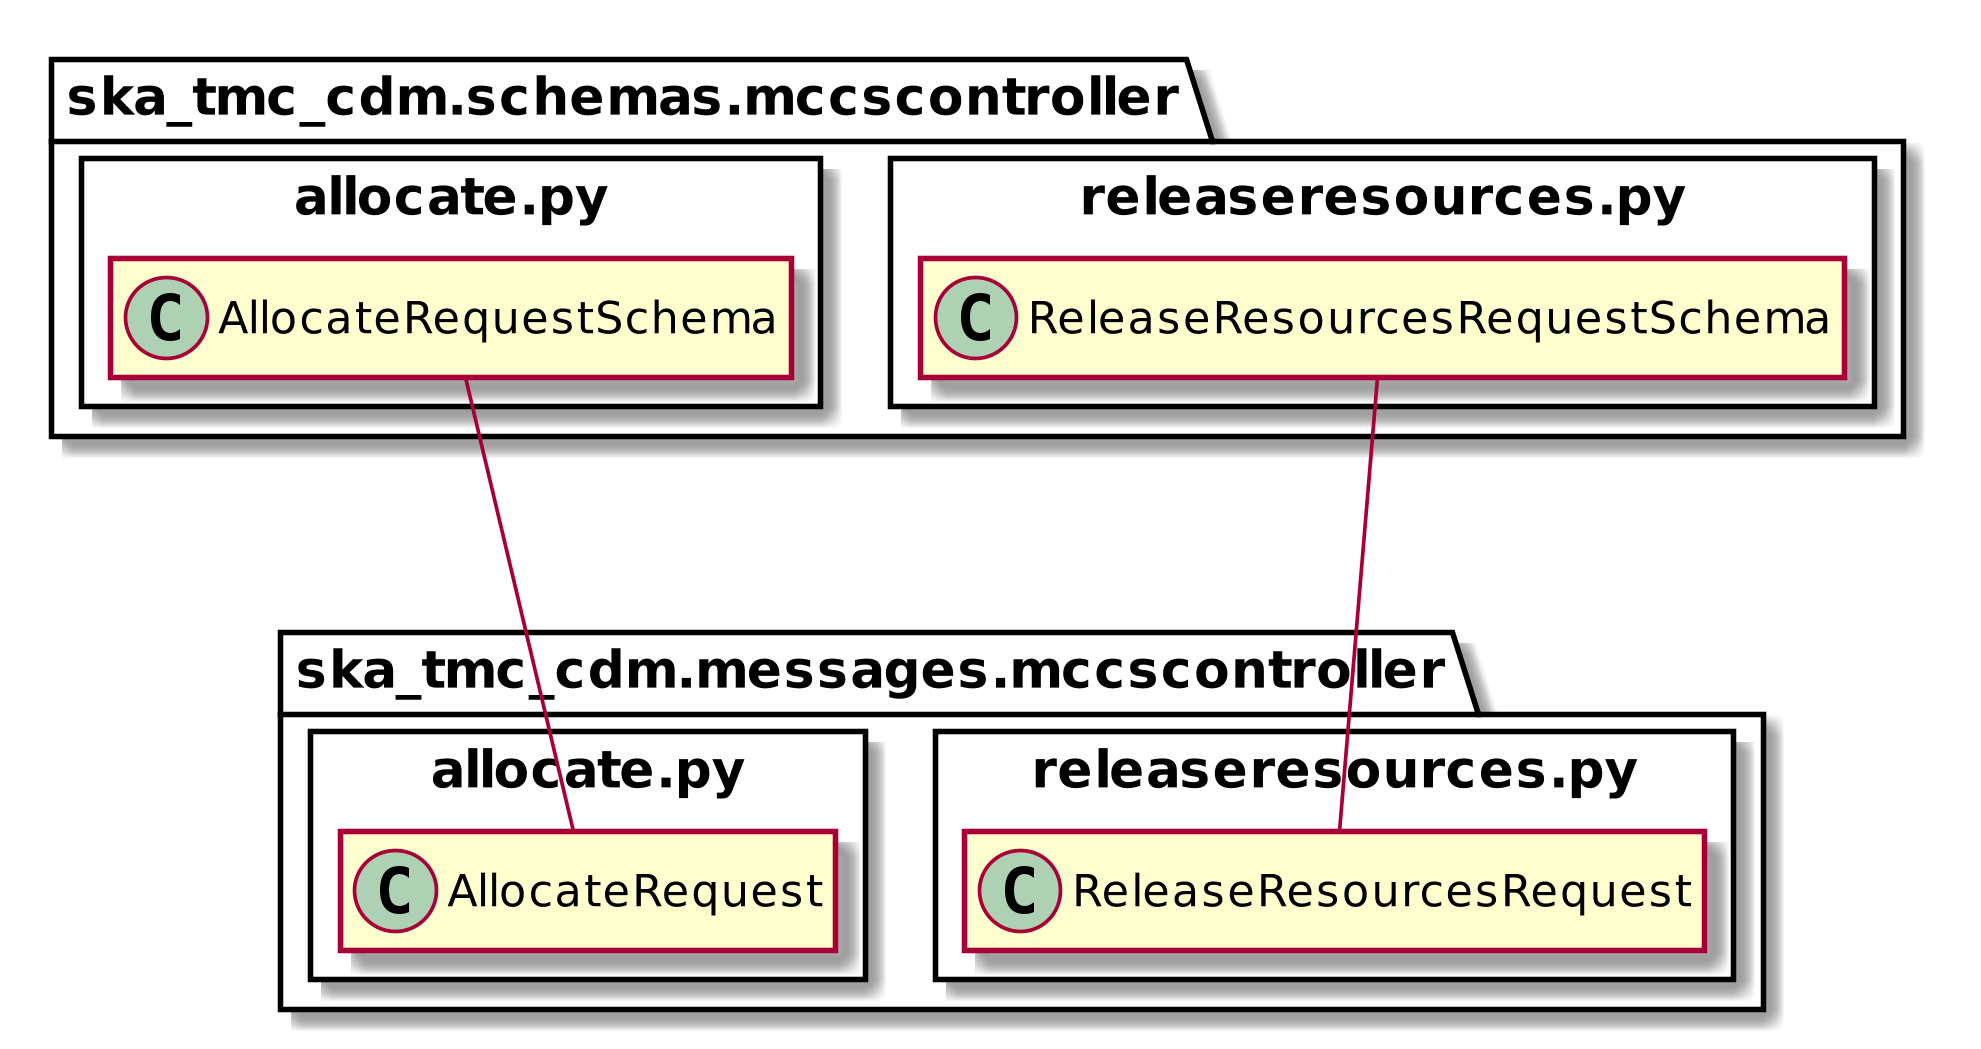 MCCSController schema